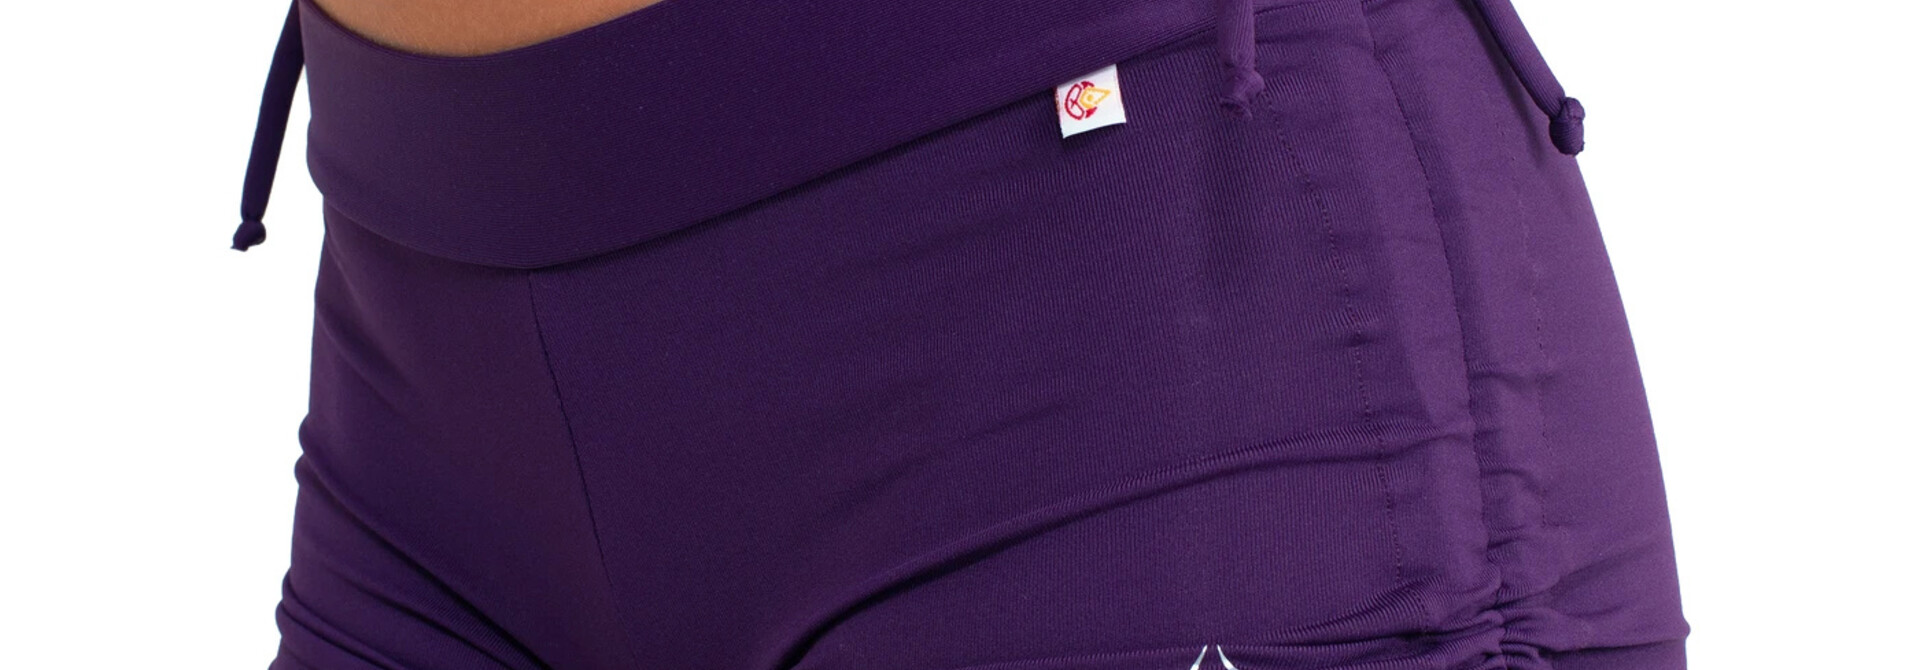 Shakti Activewear Side String Shorts - Dark Purple